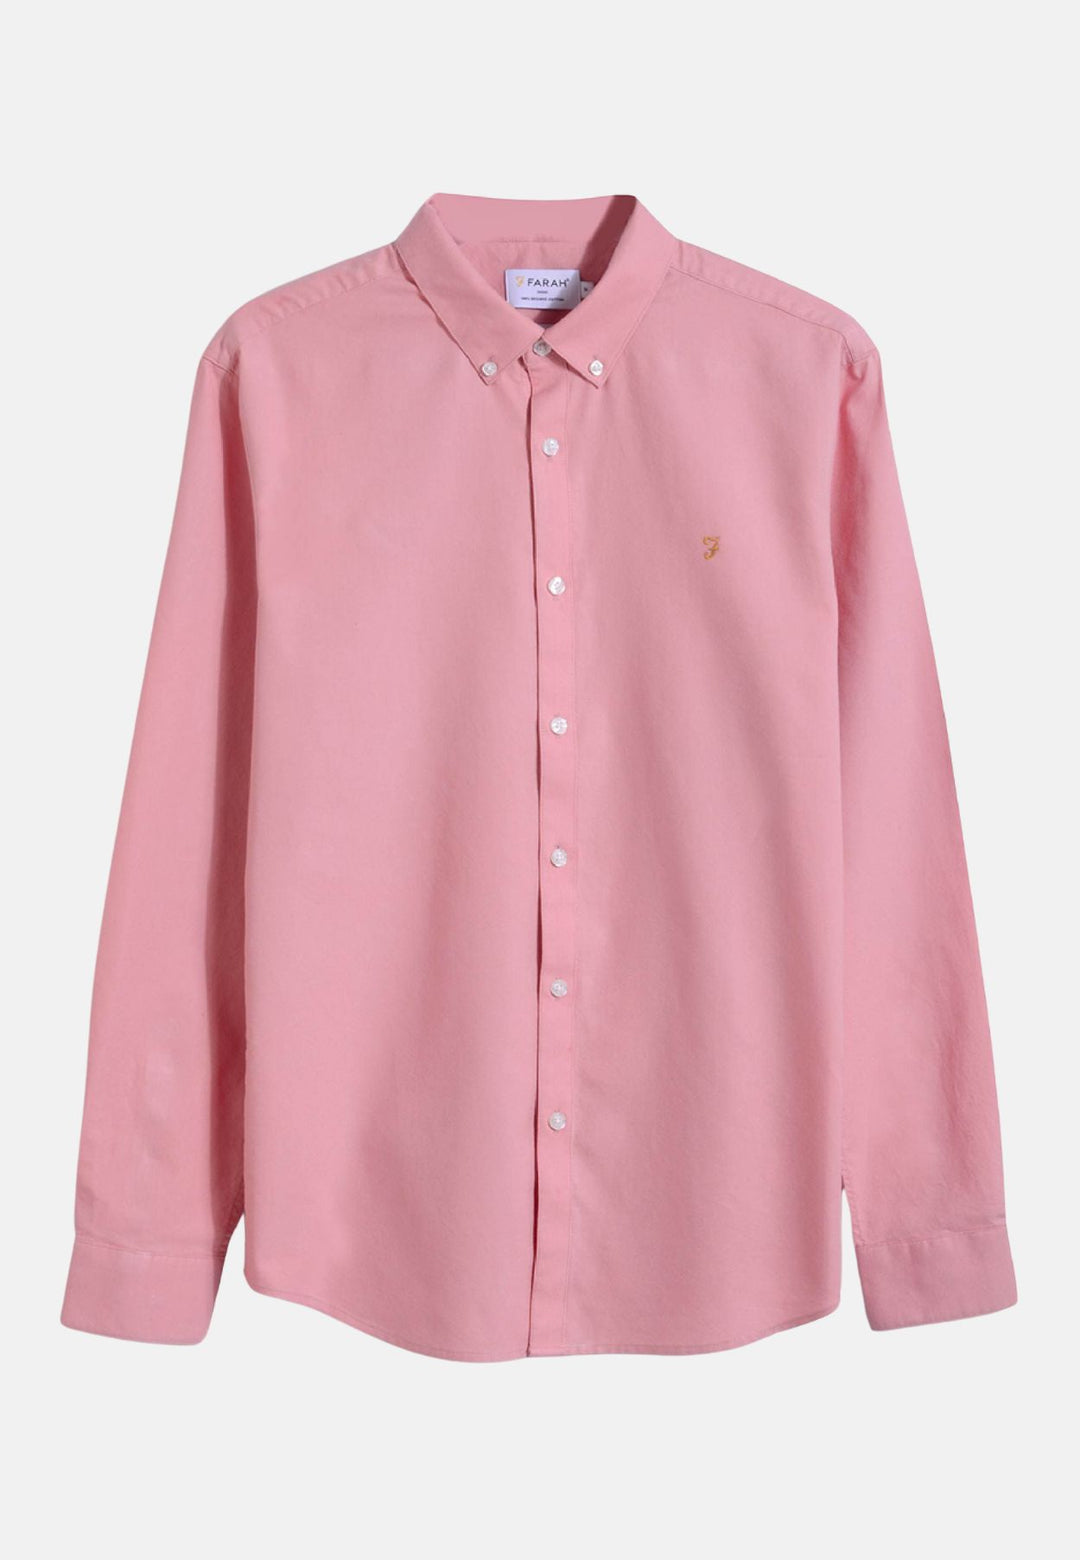 Men's Farah Brewer Oxford Shirt in Pink